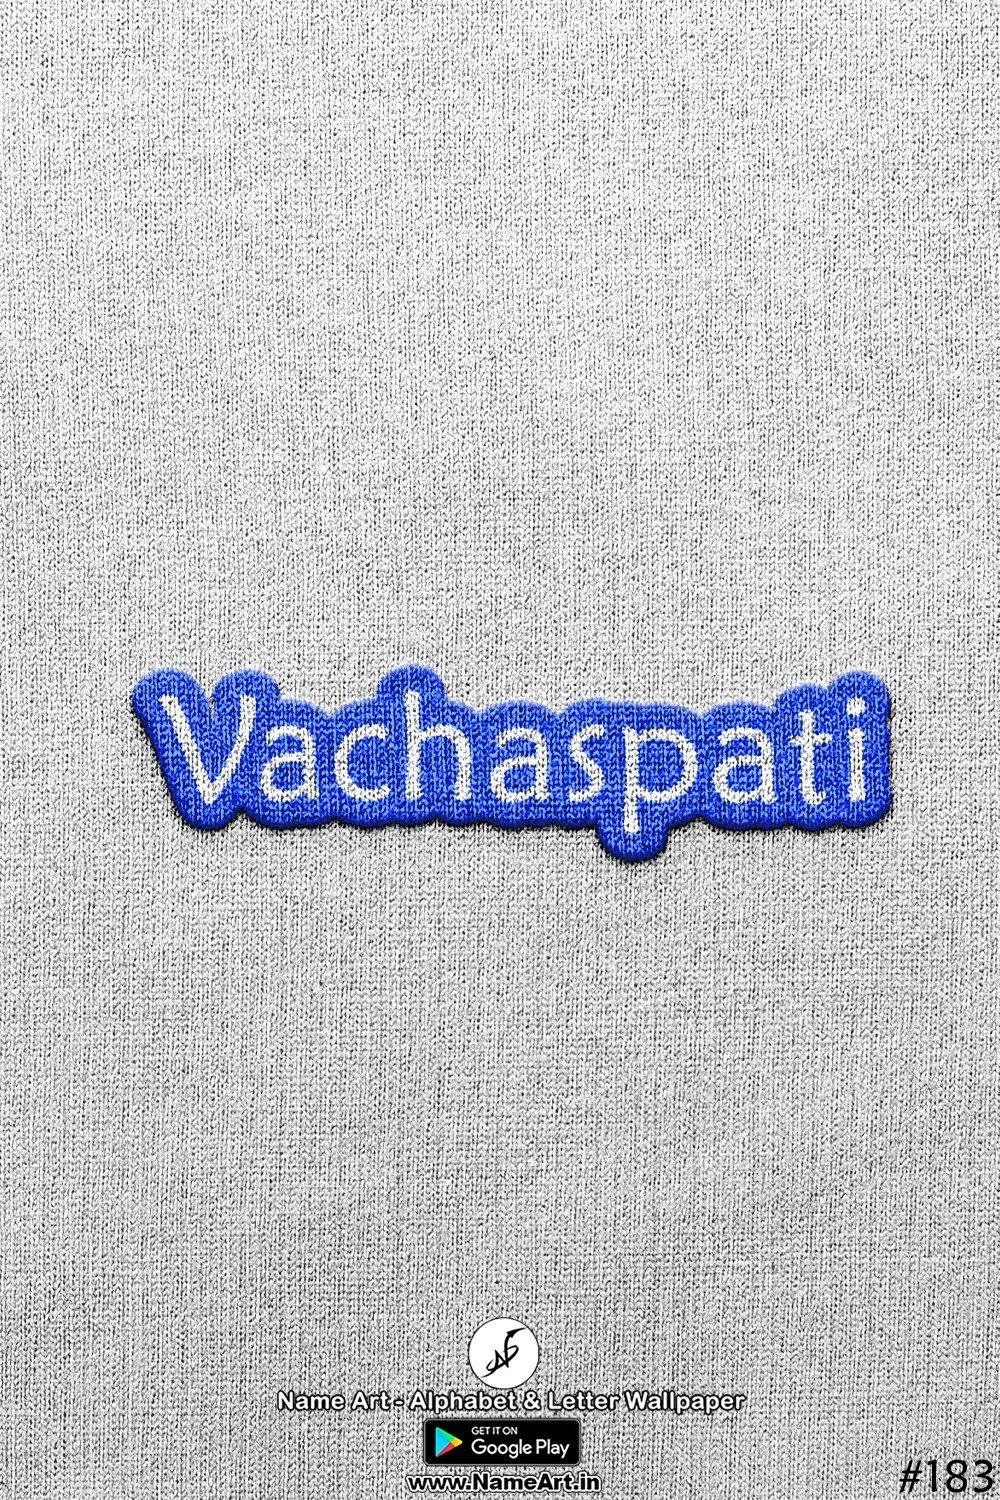 Vachaspati | Whatsapp Status Vachaspati | Happy Birthday Vachaspati !! | New Whatsapp Status Vachaspati Images |